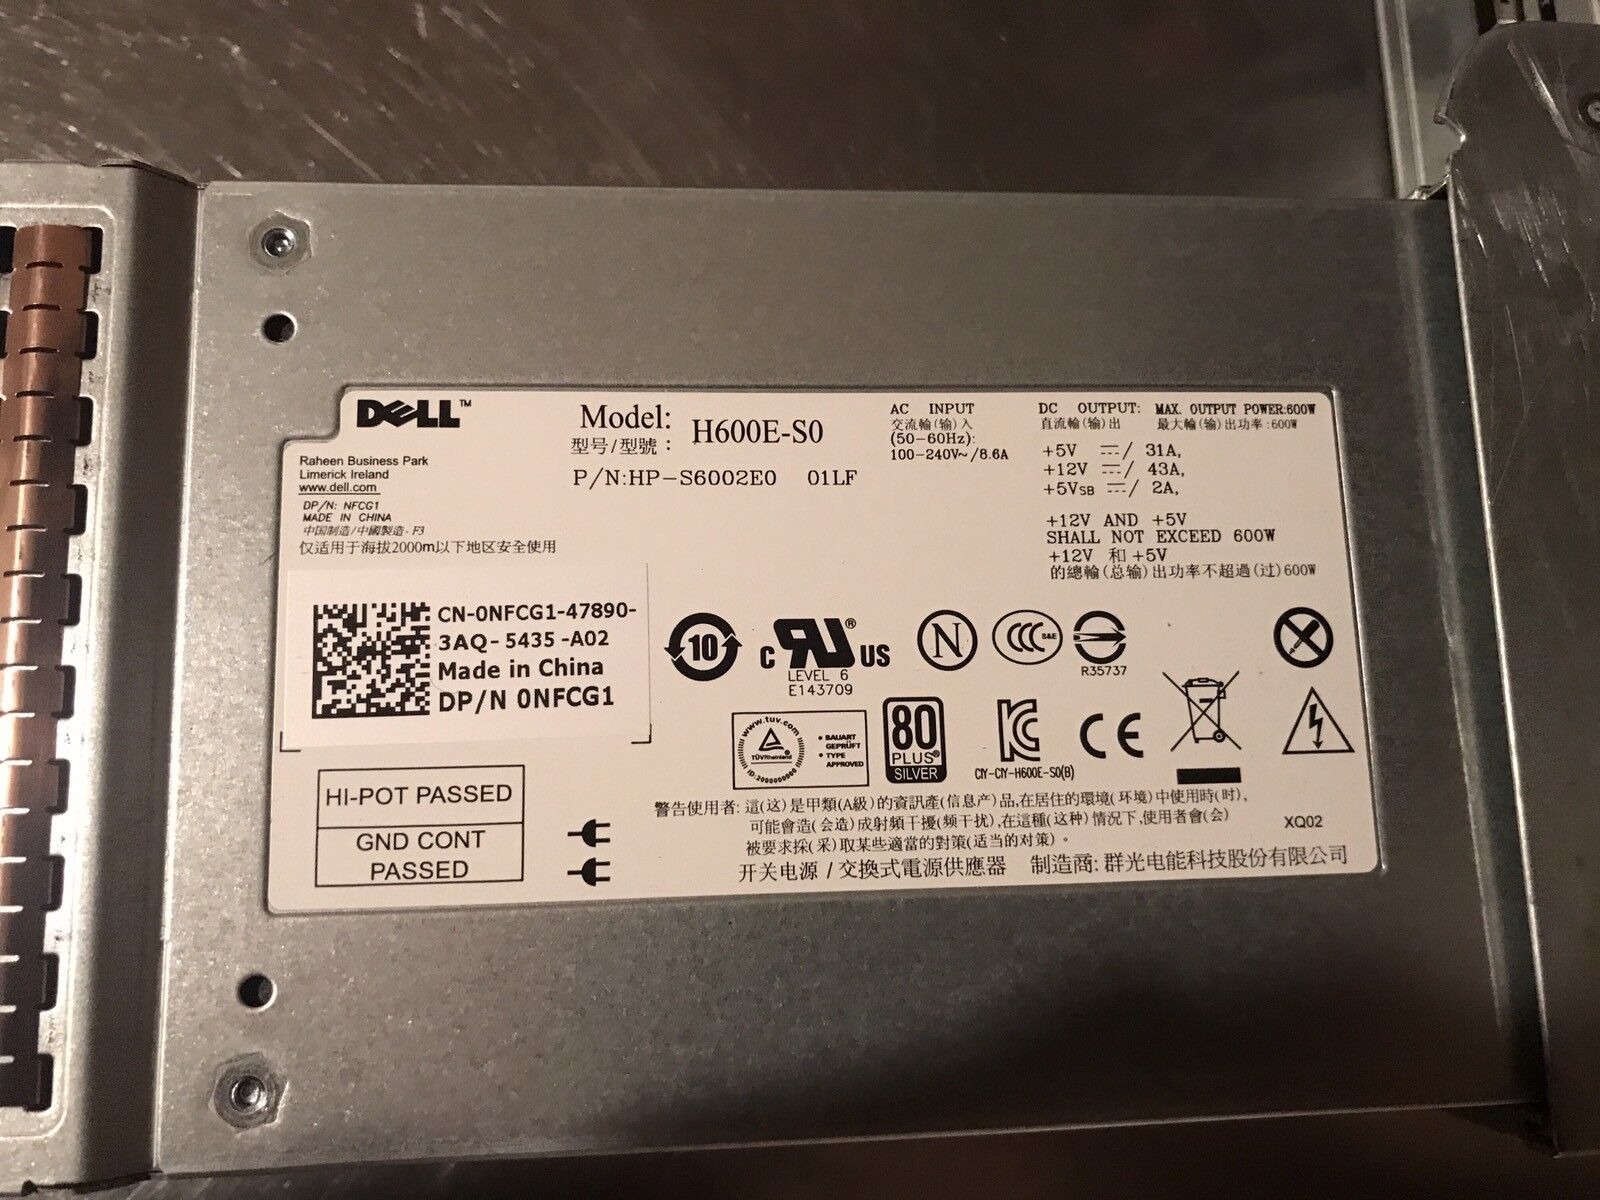 Dell PowerVault MD1220 24x 600GB 10K SAS Storage 14TB FreeNAS ZFS Expansion.